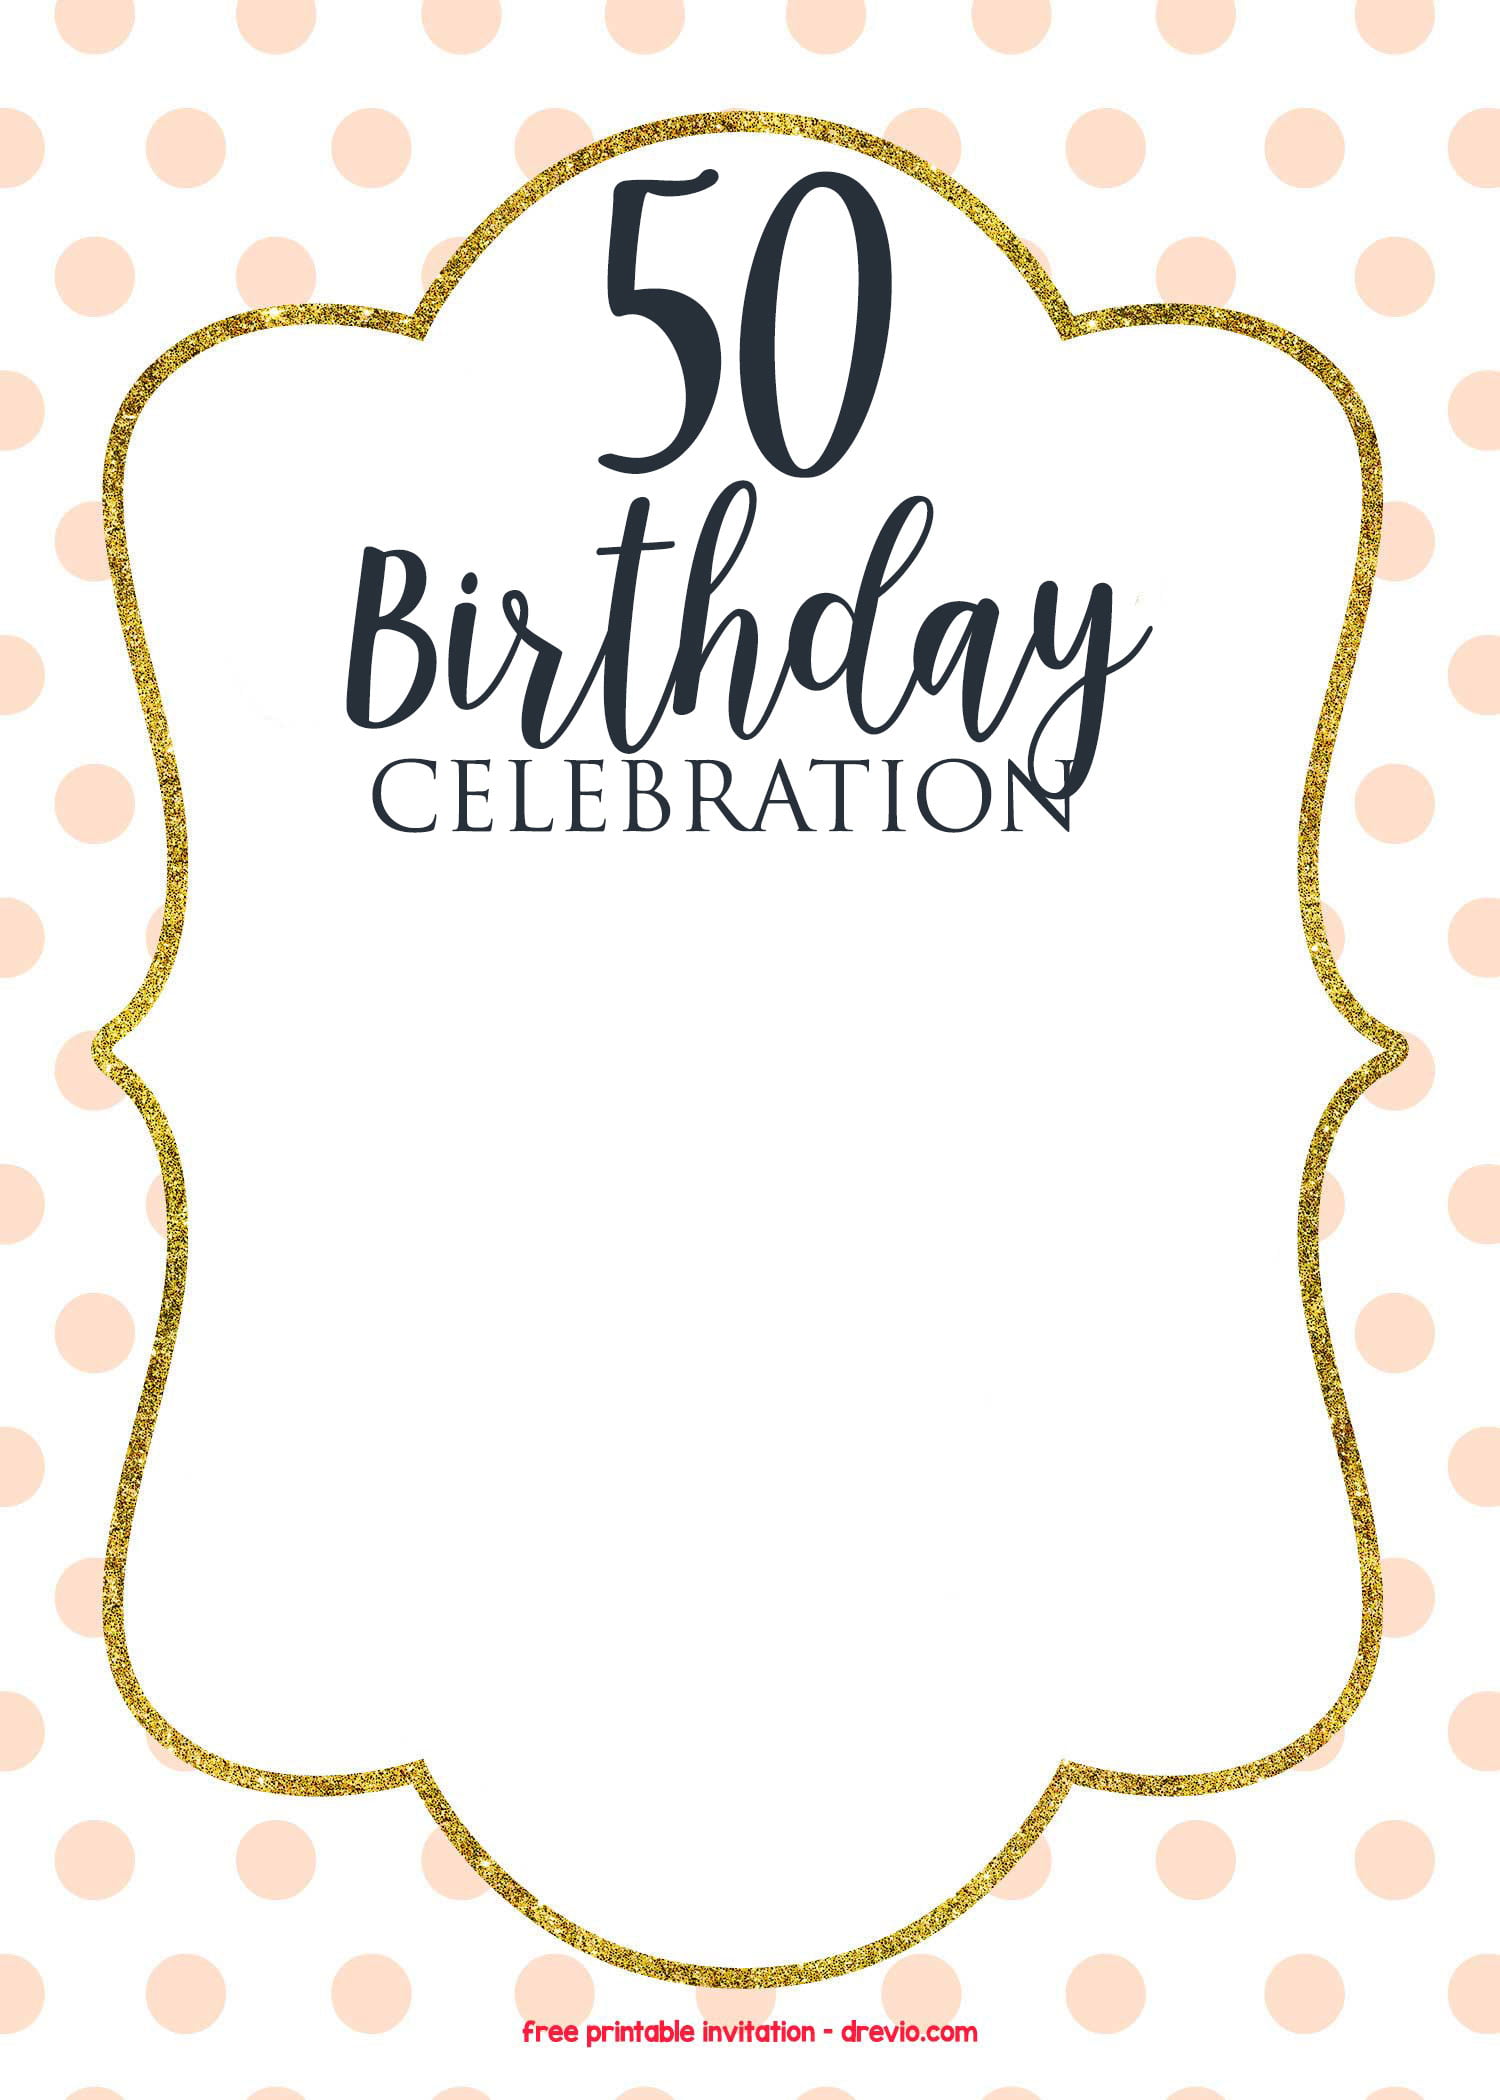 50th-birthday-invitations-online-free-printable-birthday-invitation